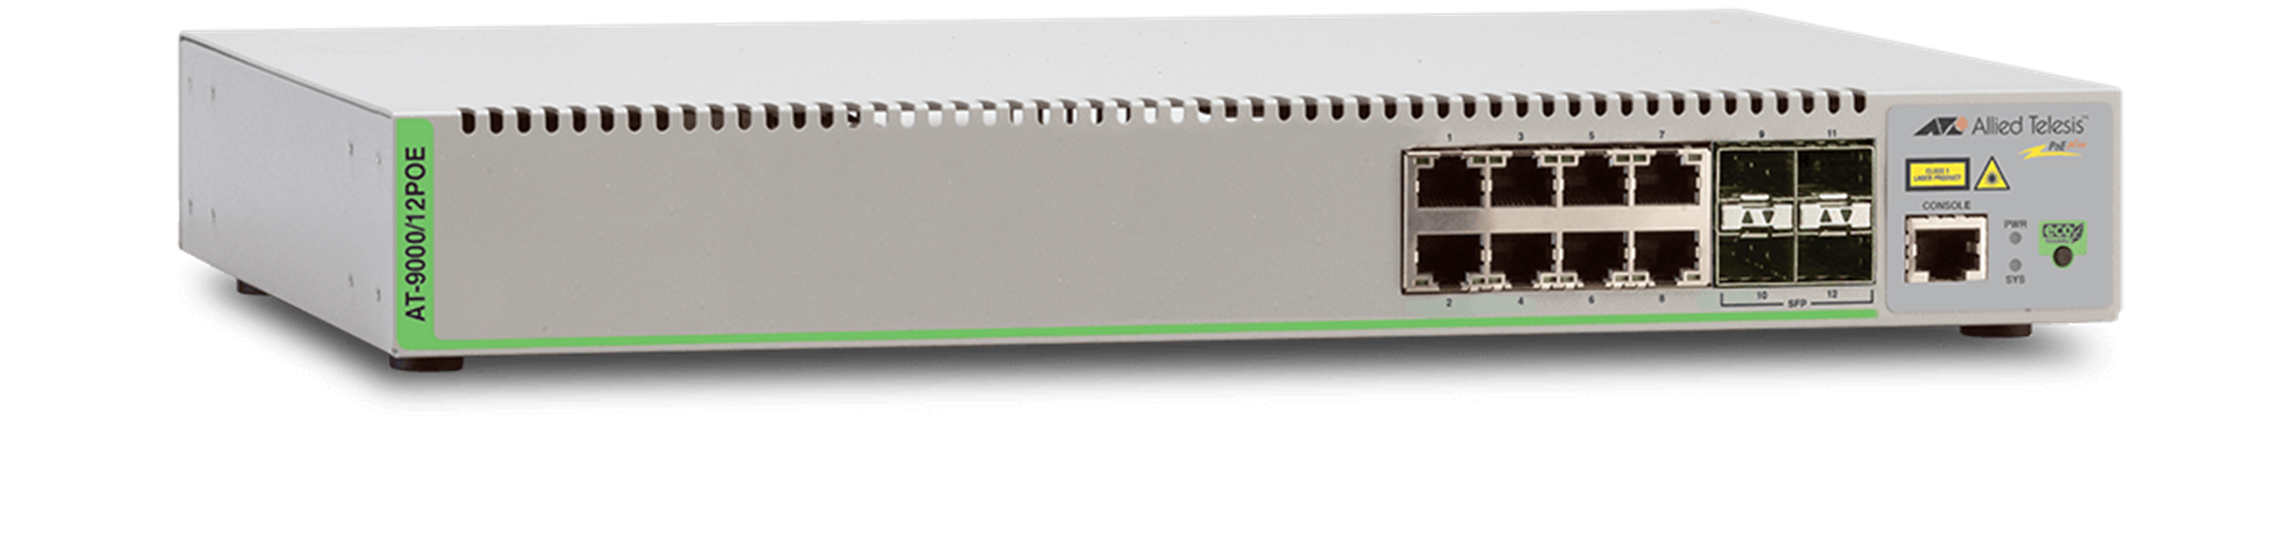 AT-9000 Series - Layer 2 Gigabit Switch (Non-China)